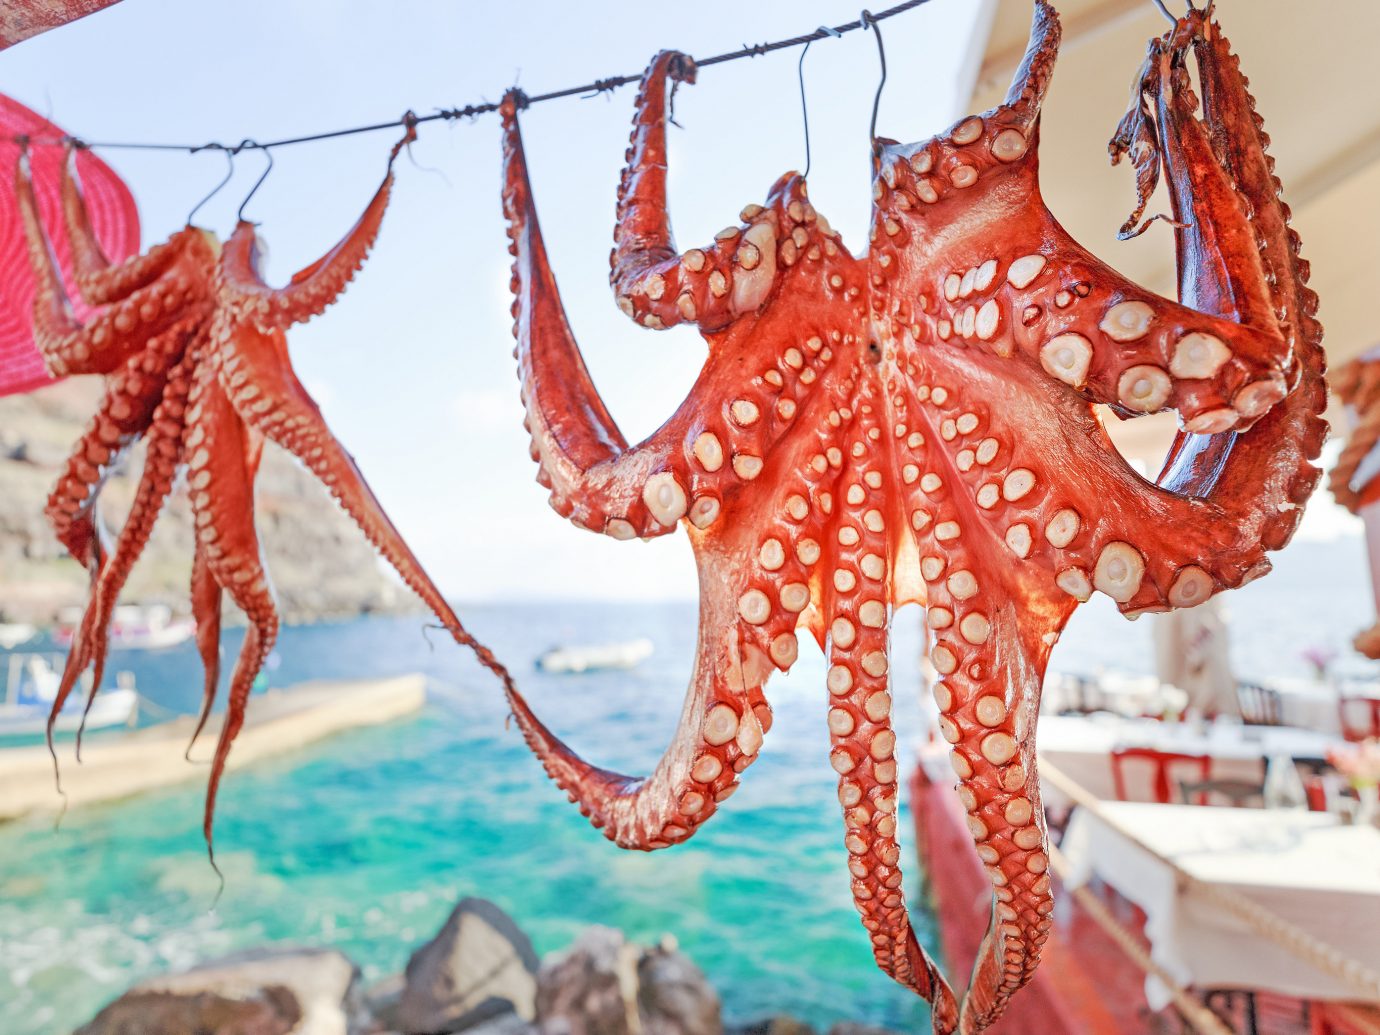 Trip Ideas octopus invertebrate cephalopod marine invertebrates